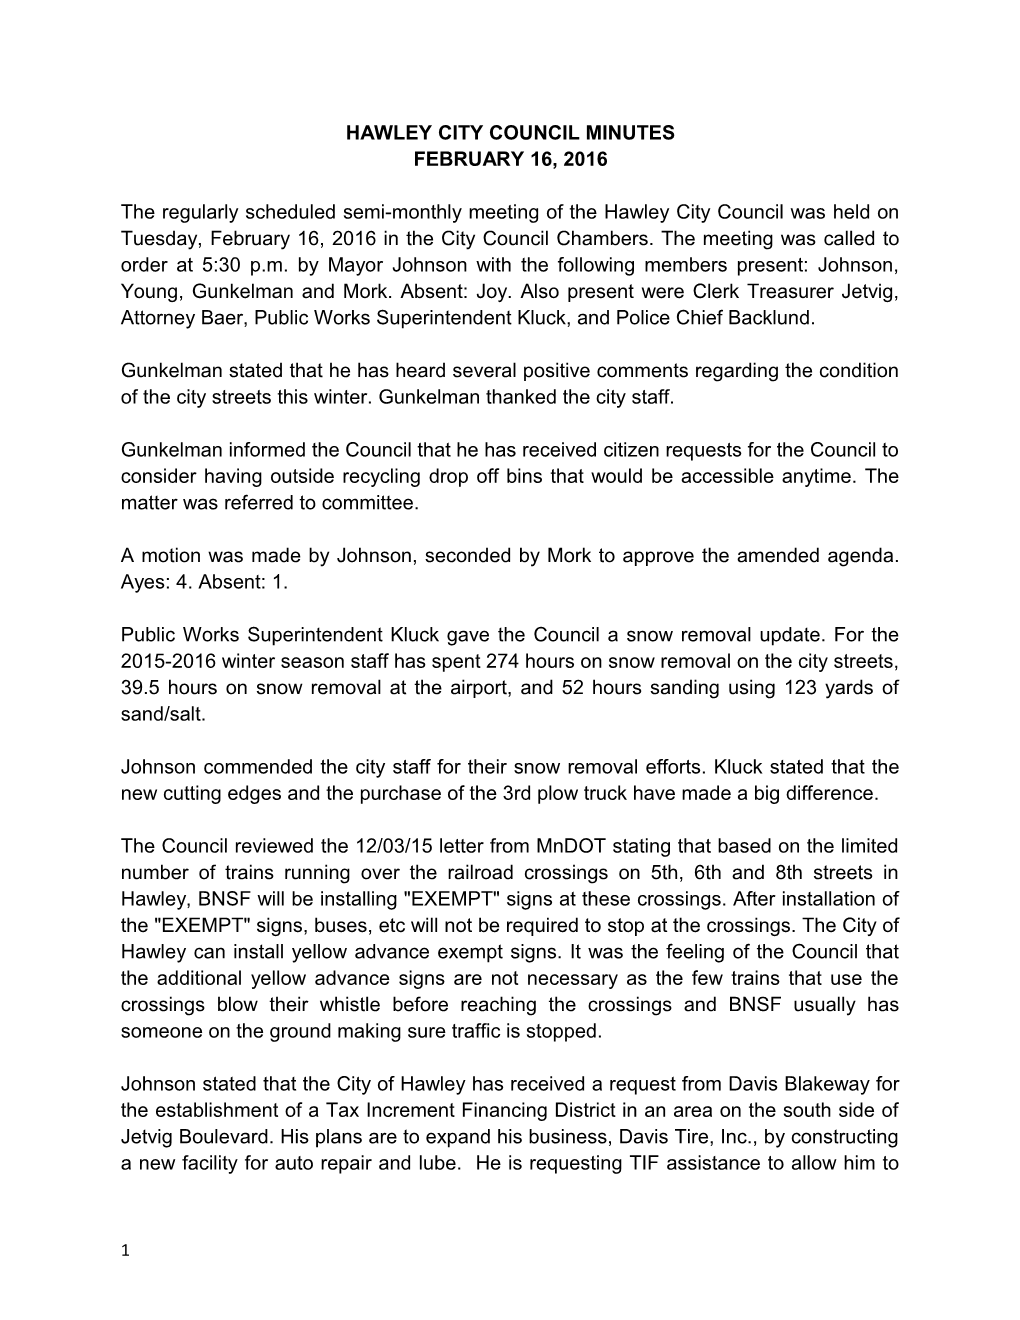 Hawley City Council Minutes